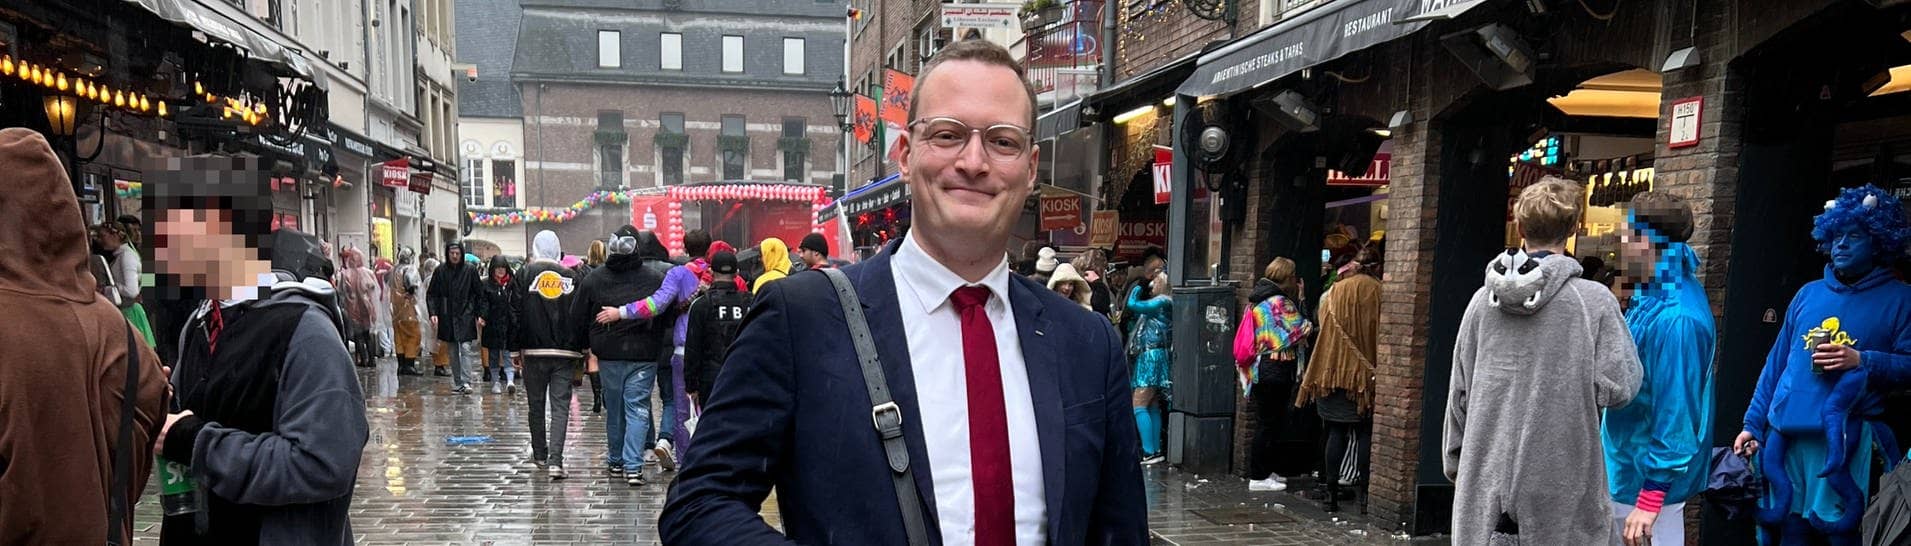 Mirco Budde als Doppelgänger von Politiker Jens Spahn beim Düsseldorfer Karneval (Foto: Mirco Budde)